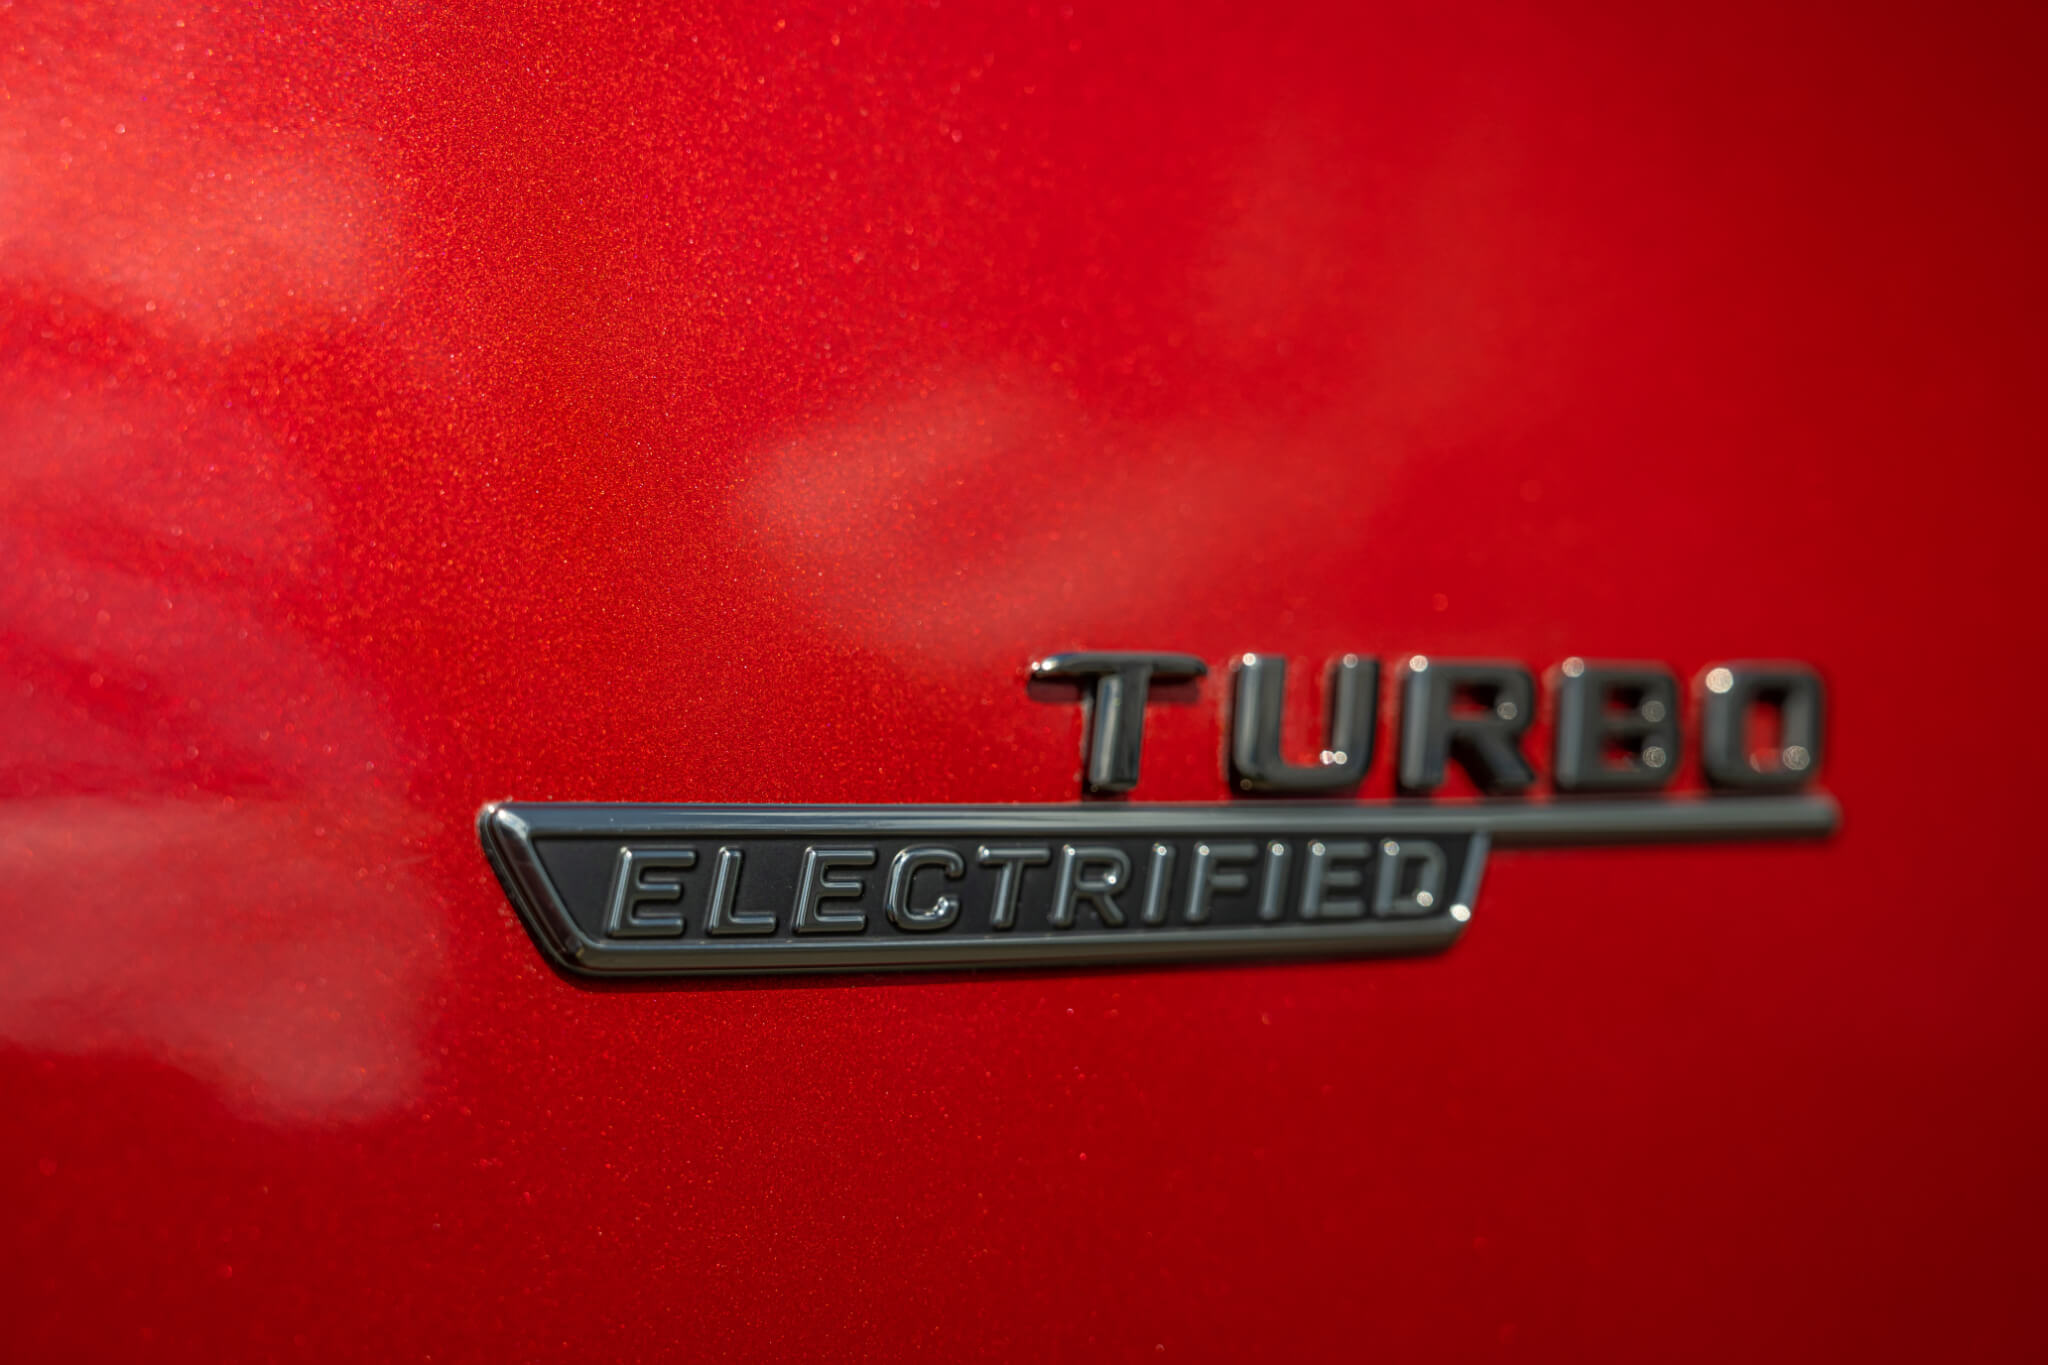 emblema "Turbo Electrified"